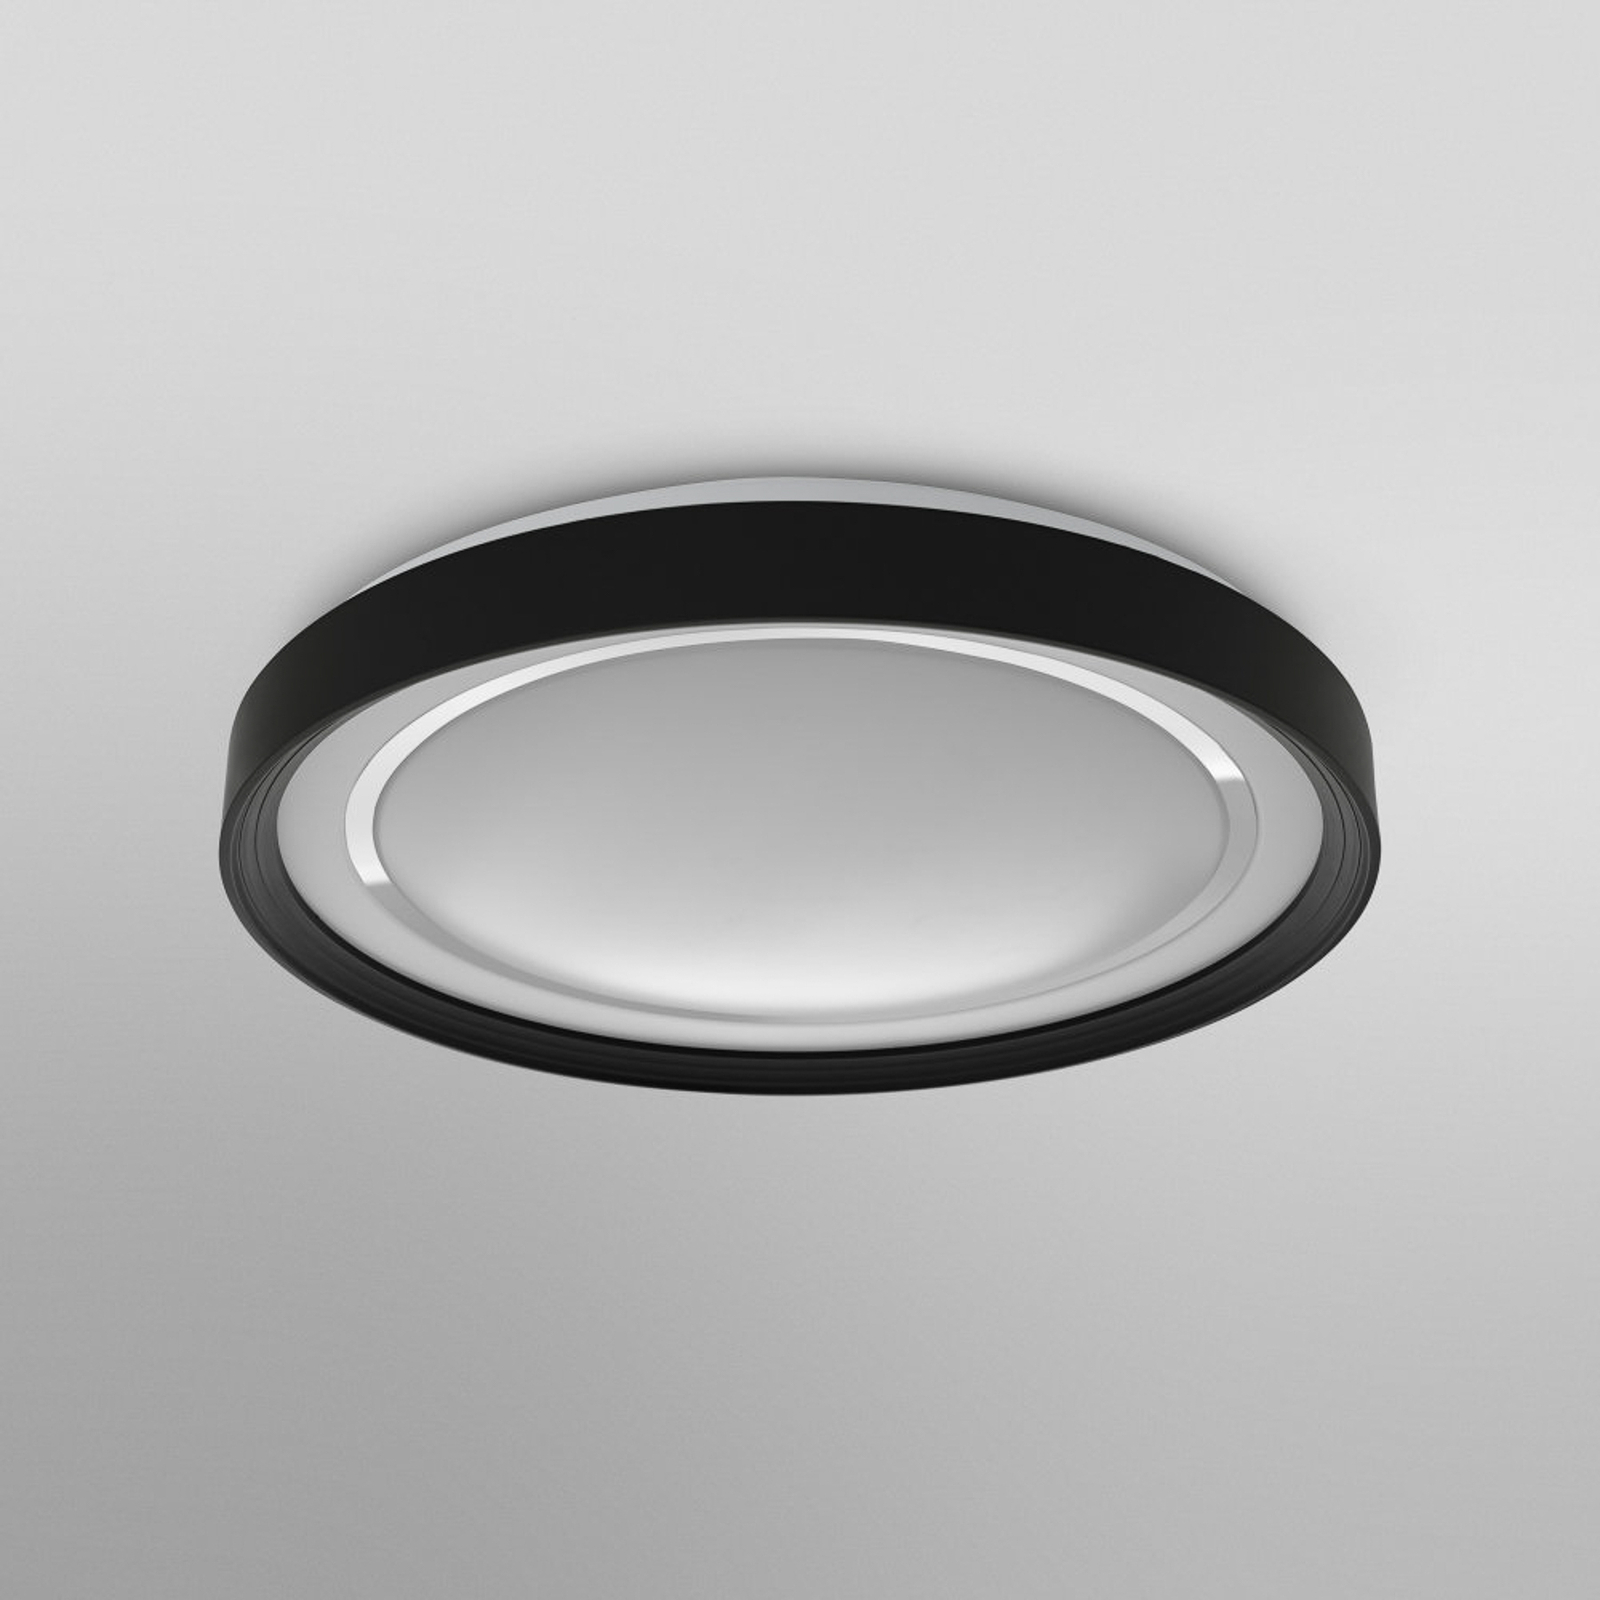 LEDVANCE SMART+WiFi Orbis Gavin stropné LED svetlo